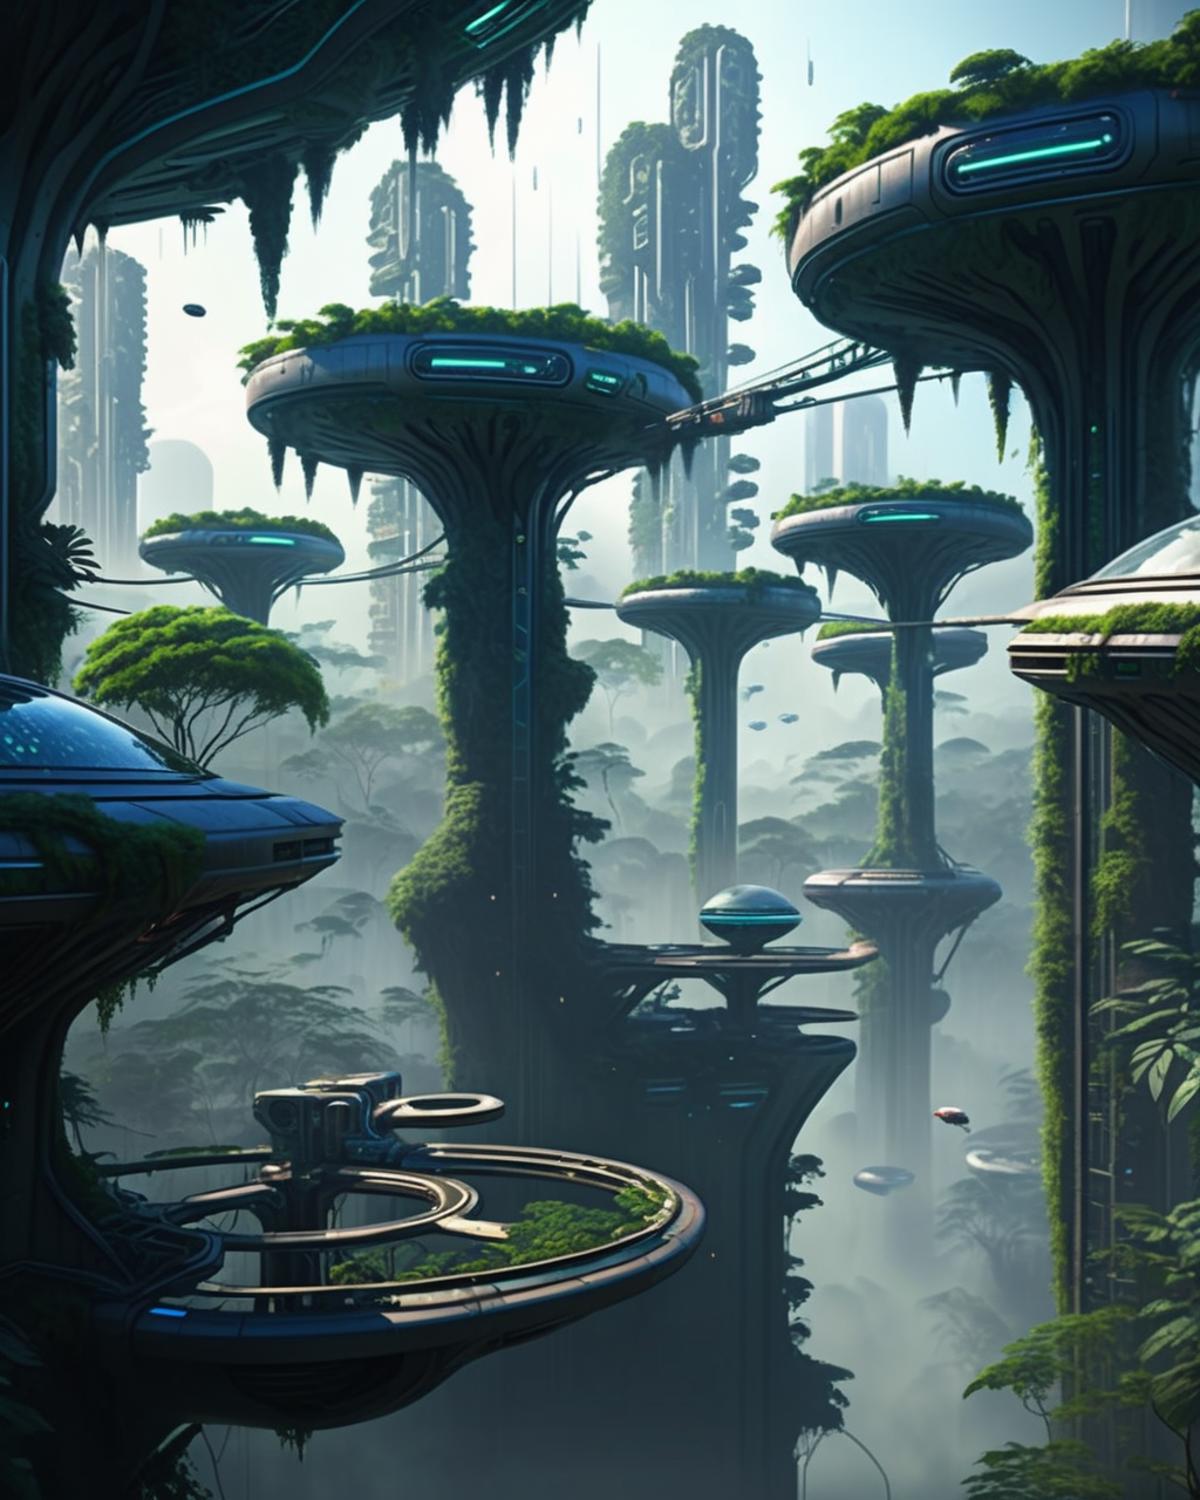 Sci-fi Environments image by Ciro_Negrogni